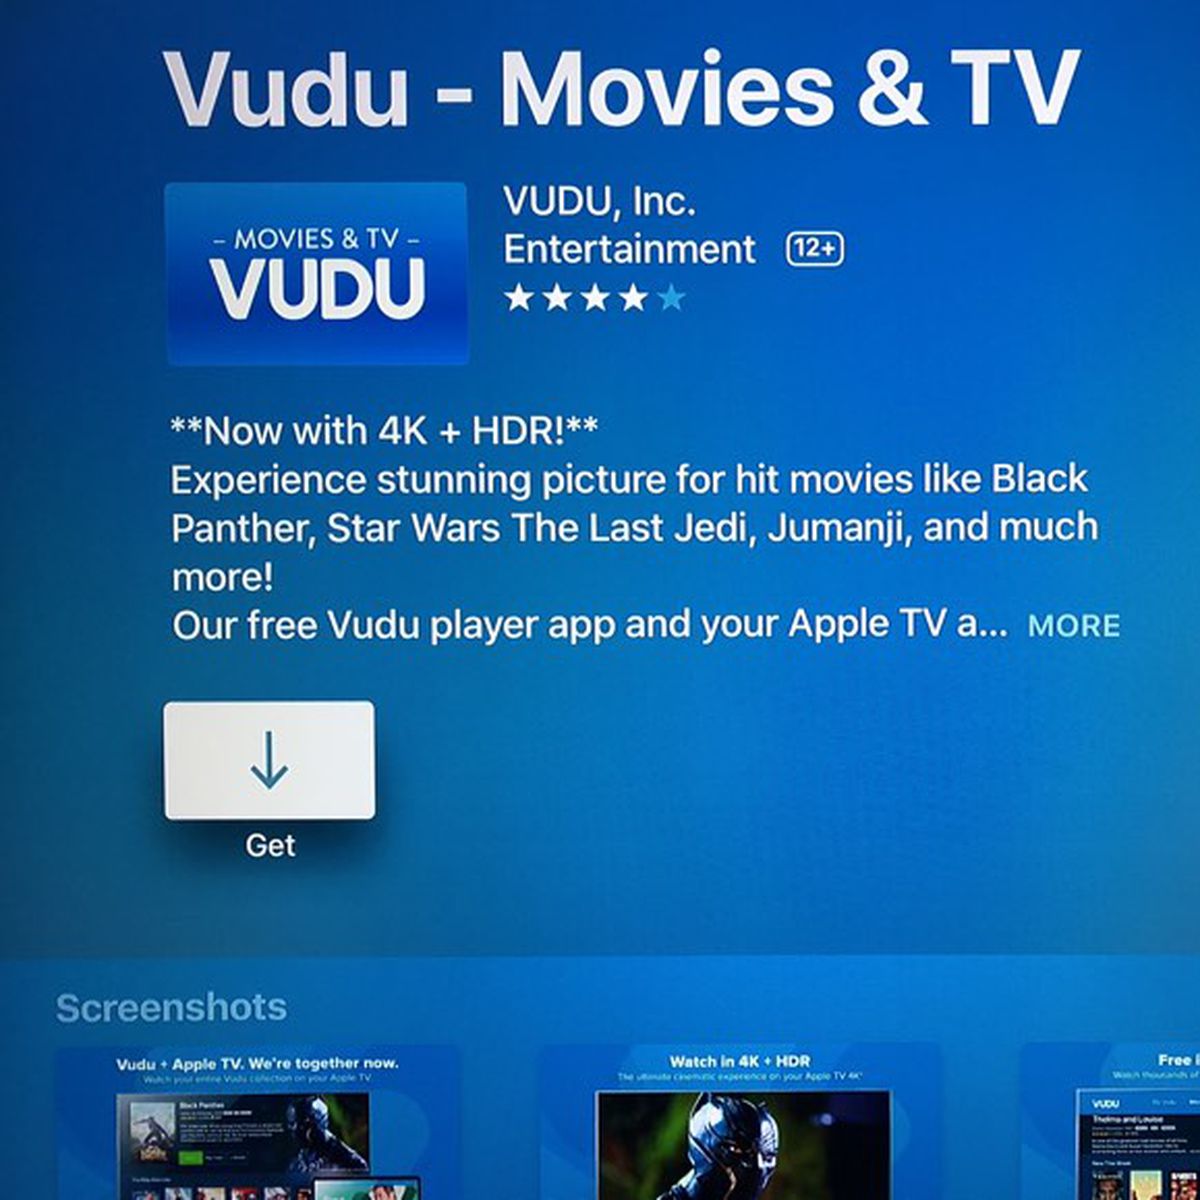 vudu to go app unable to download